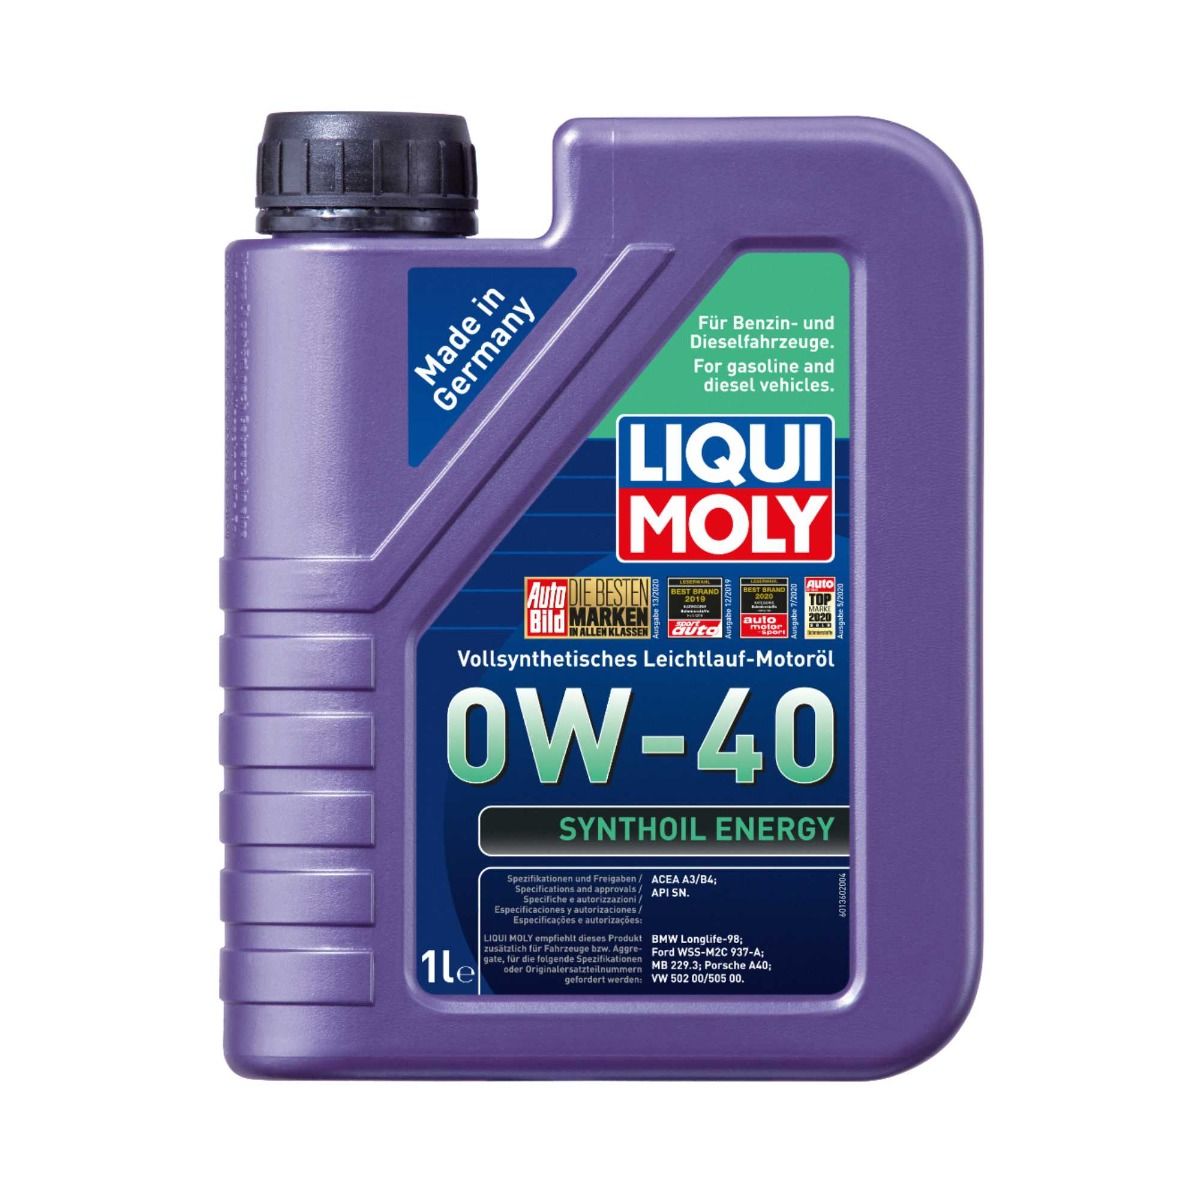 Liqui Moly Synthoil Energy 0W-40